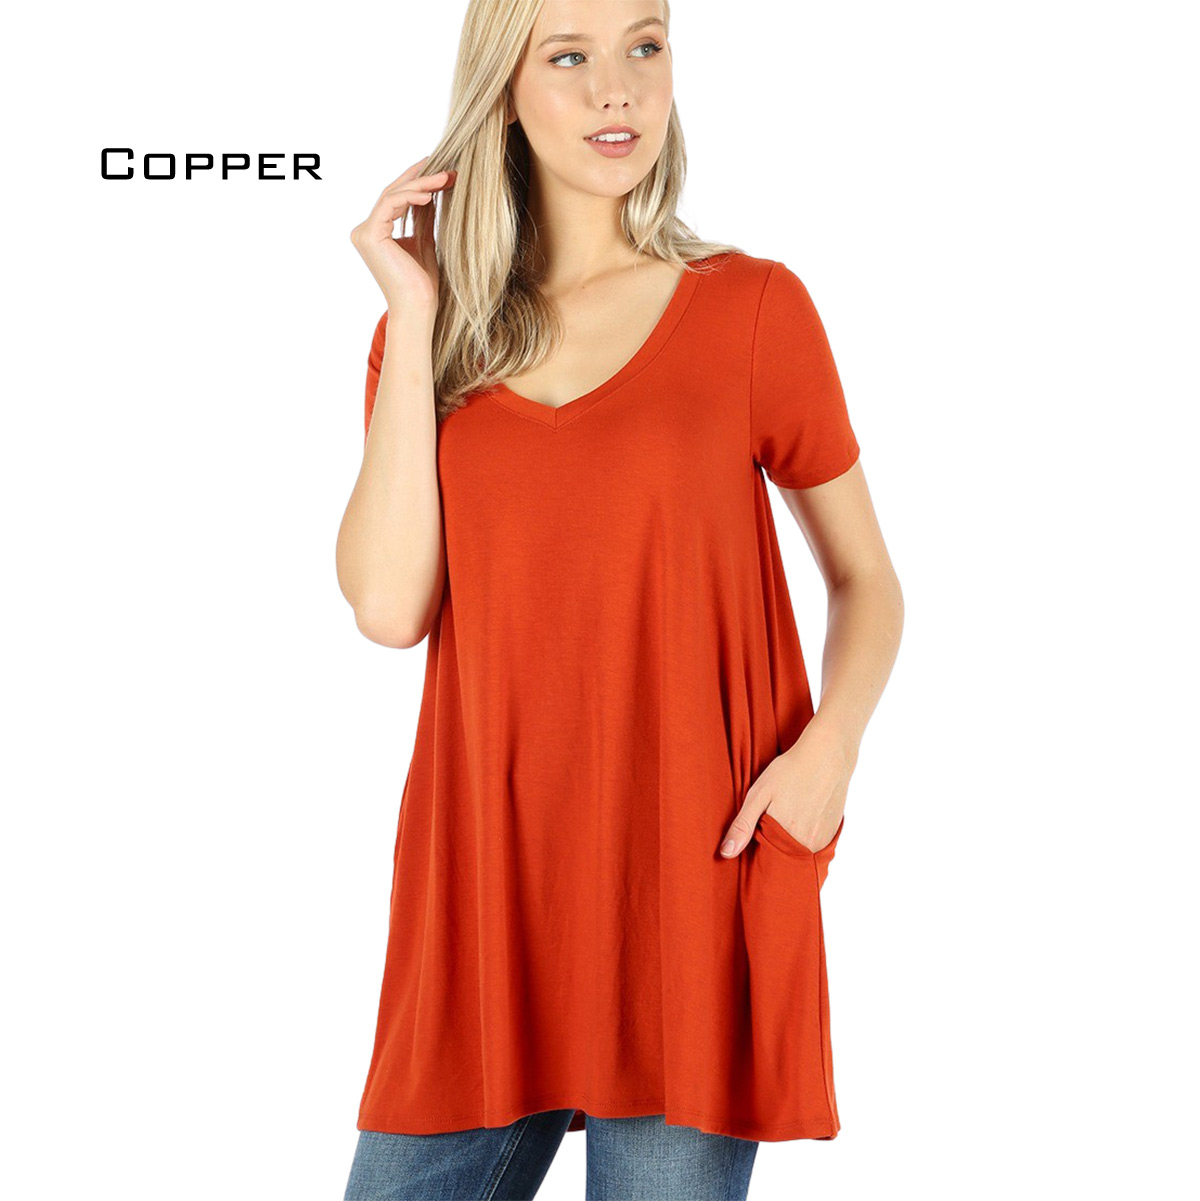 COPPER Short Sleeve V-Neck Top w/ Pockets 1635